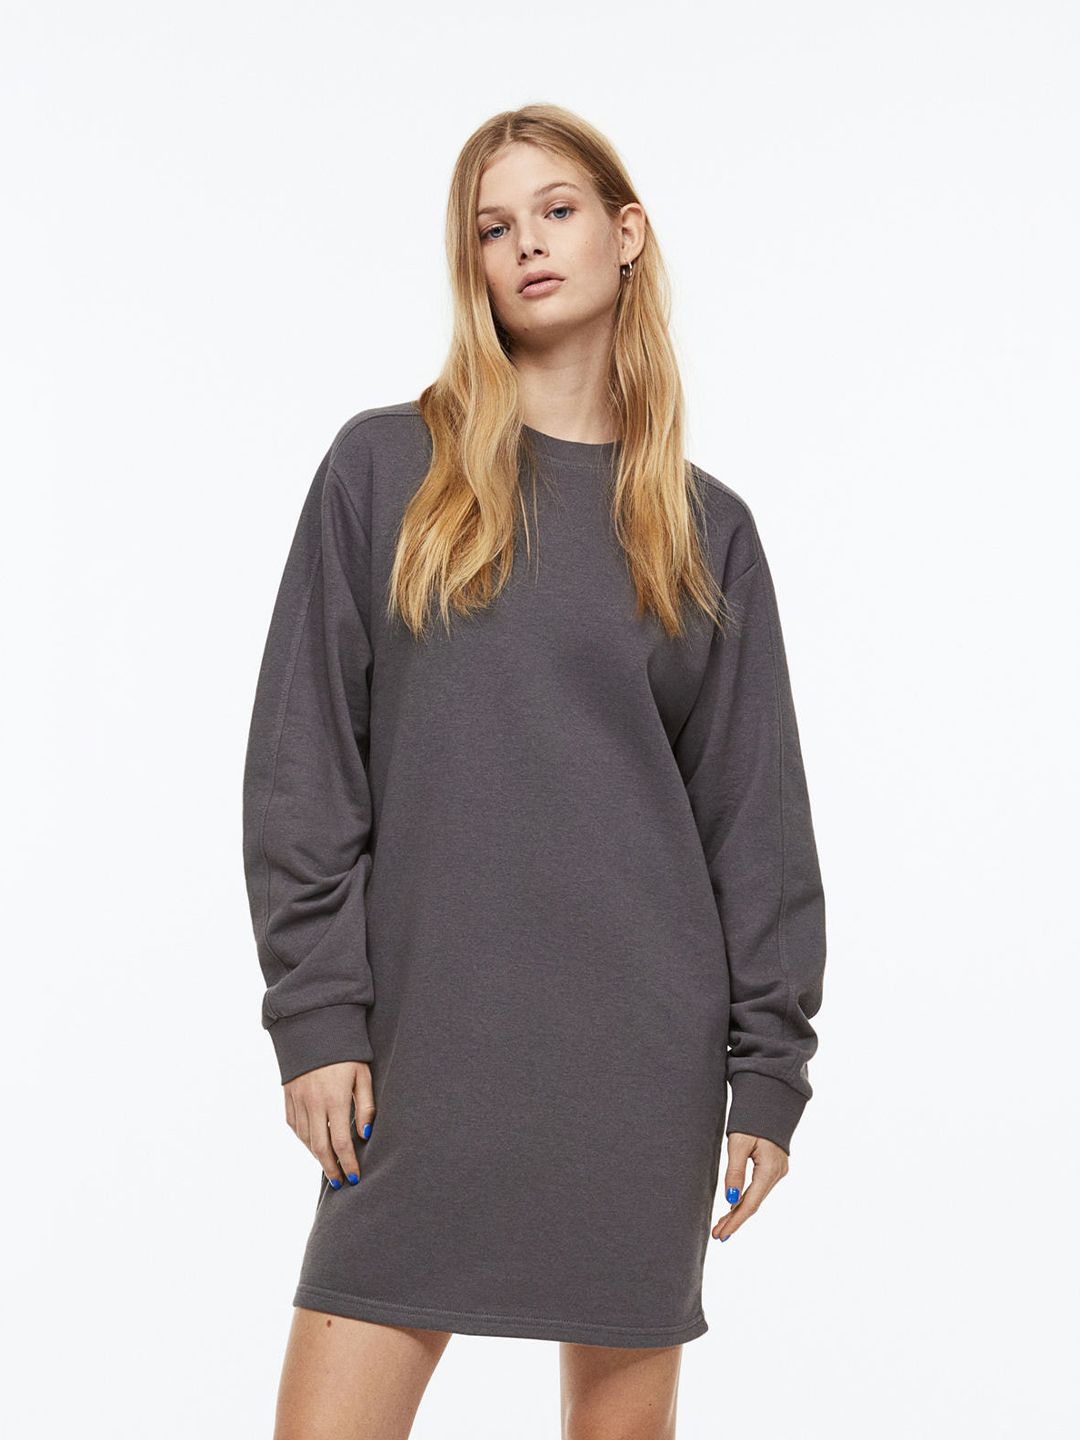 H&M Sweatshirt Dress Price in India